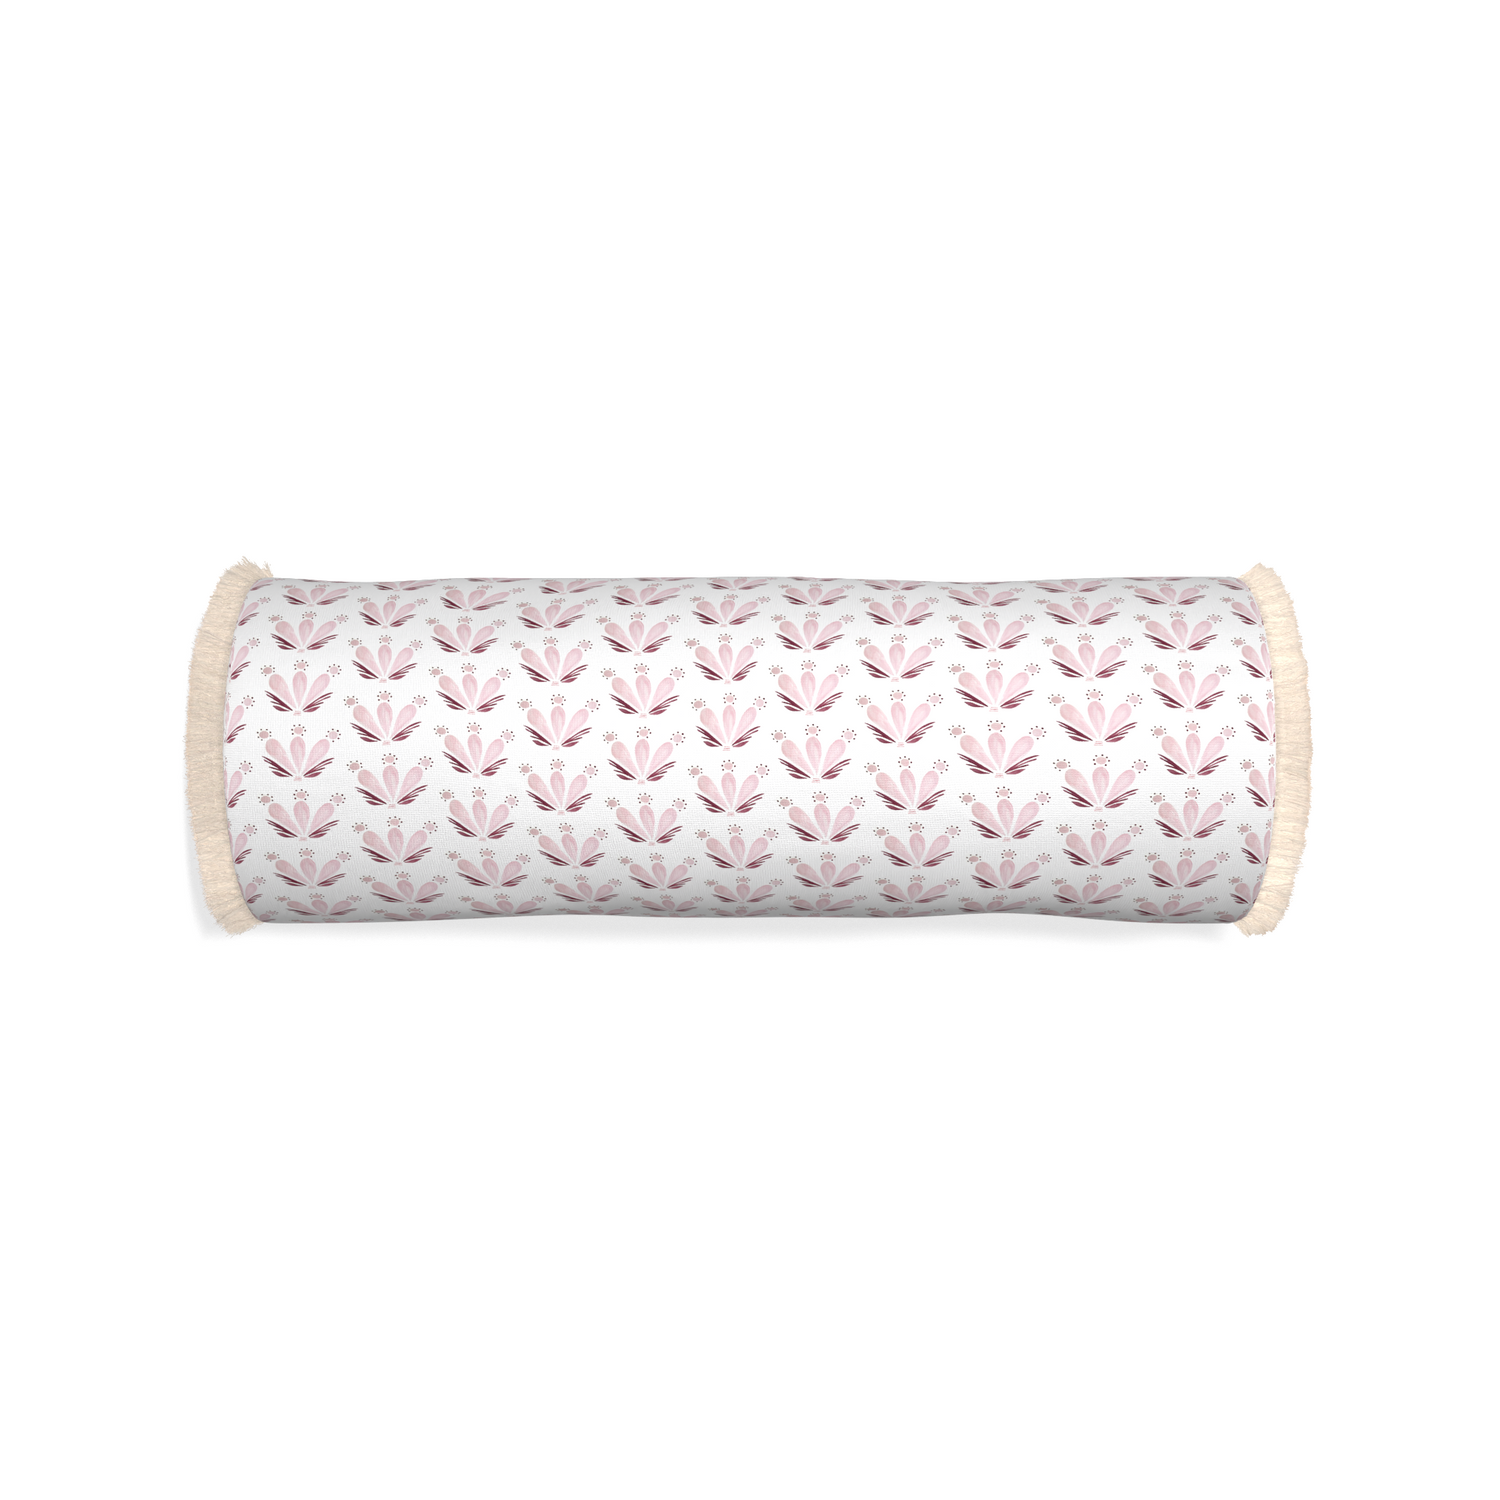 Bolster serena pink custom pillow with cream fringe on white background